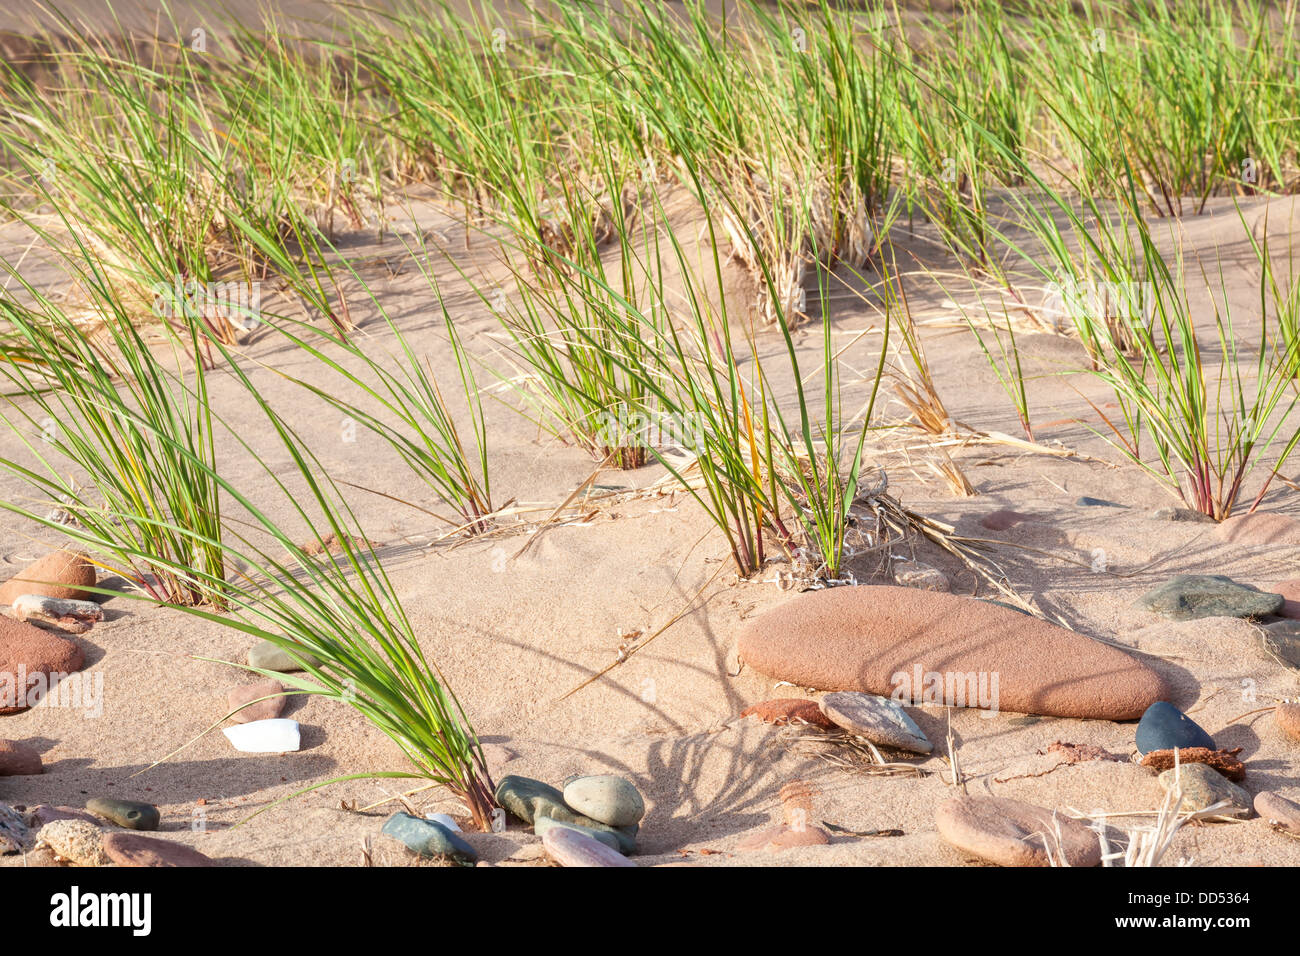 Wilde Maram Rasen wachsen auf Prince Edward Island Strand. Stockfoto